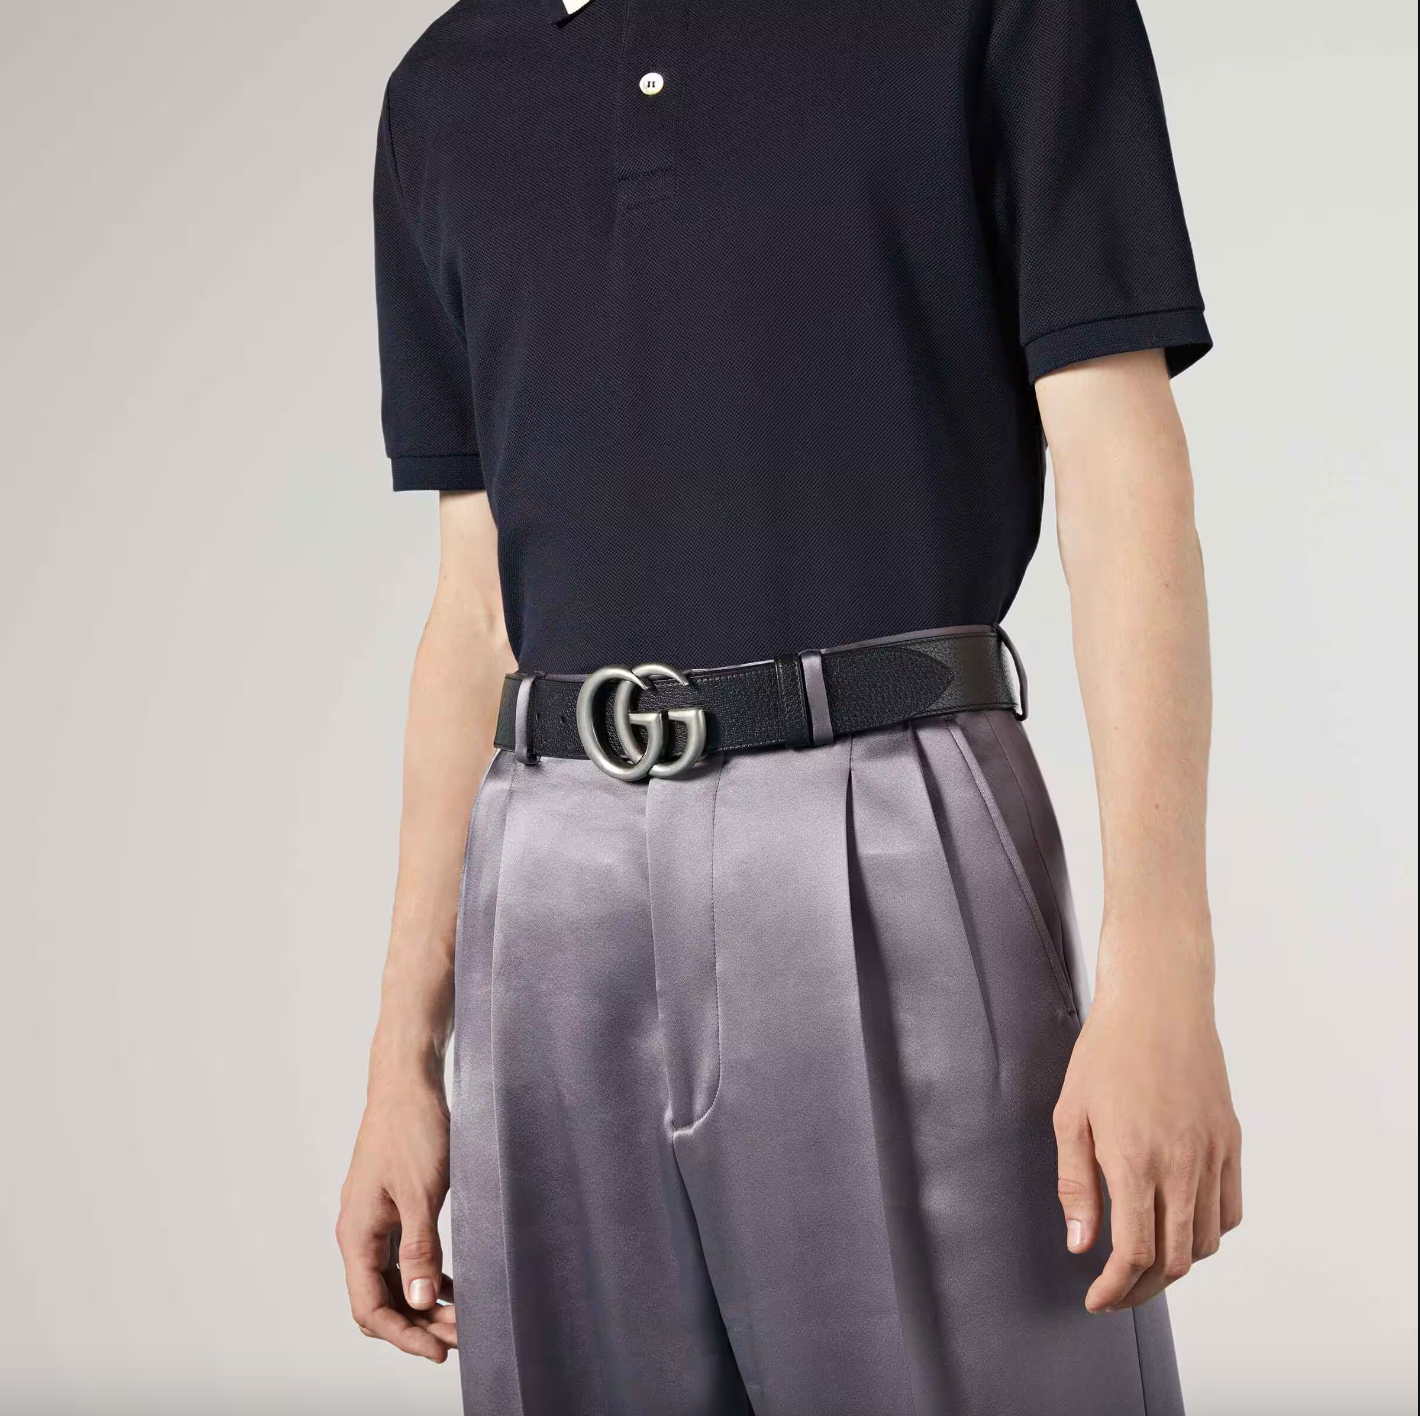 Gucci Reversible Belt w/ Tags - Size 36